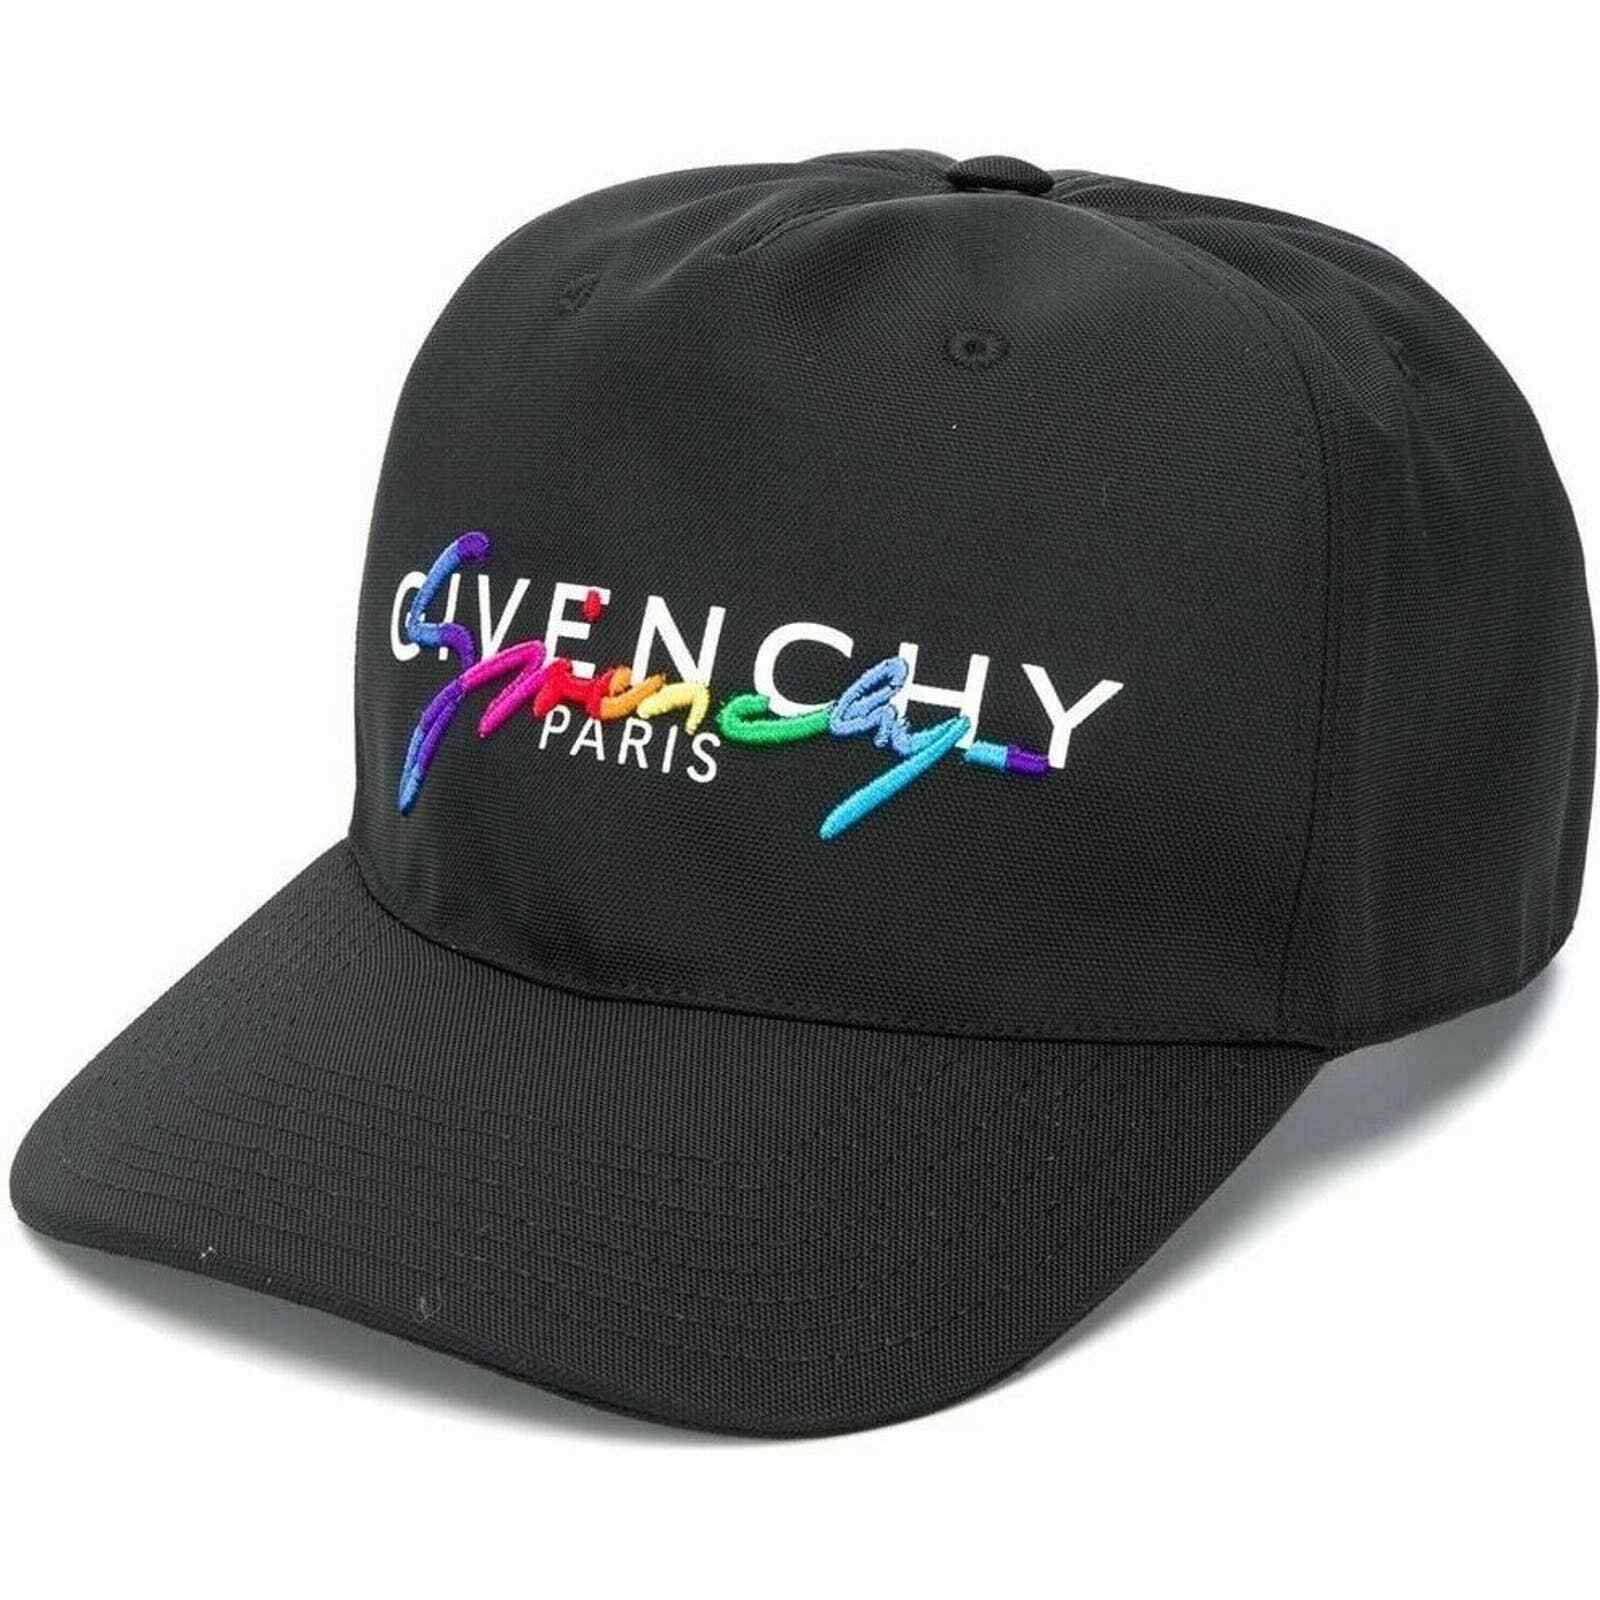 Givenchy Paris Black Cotton Red Rainbow White Logo Baseball Cap Curved Peak  Hat | eBay